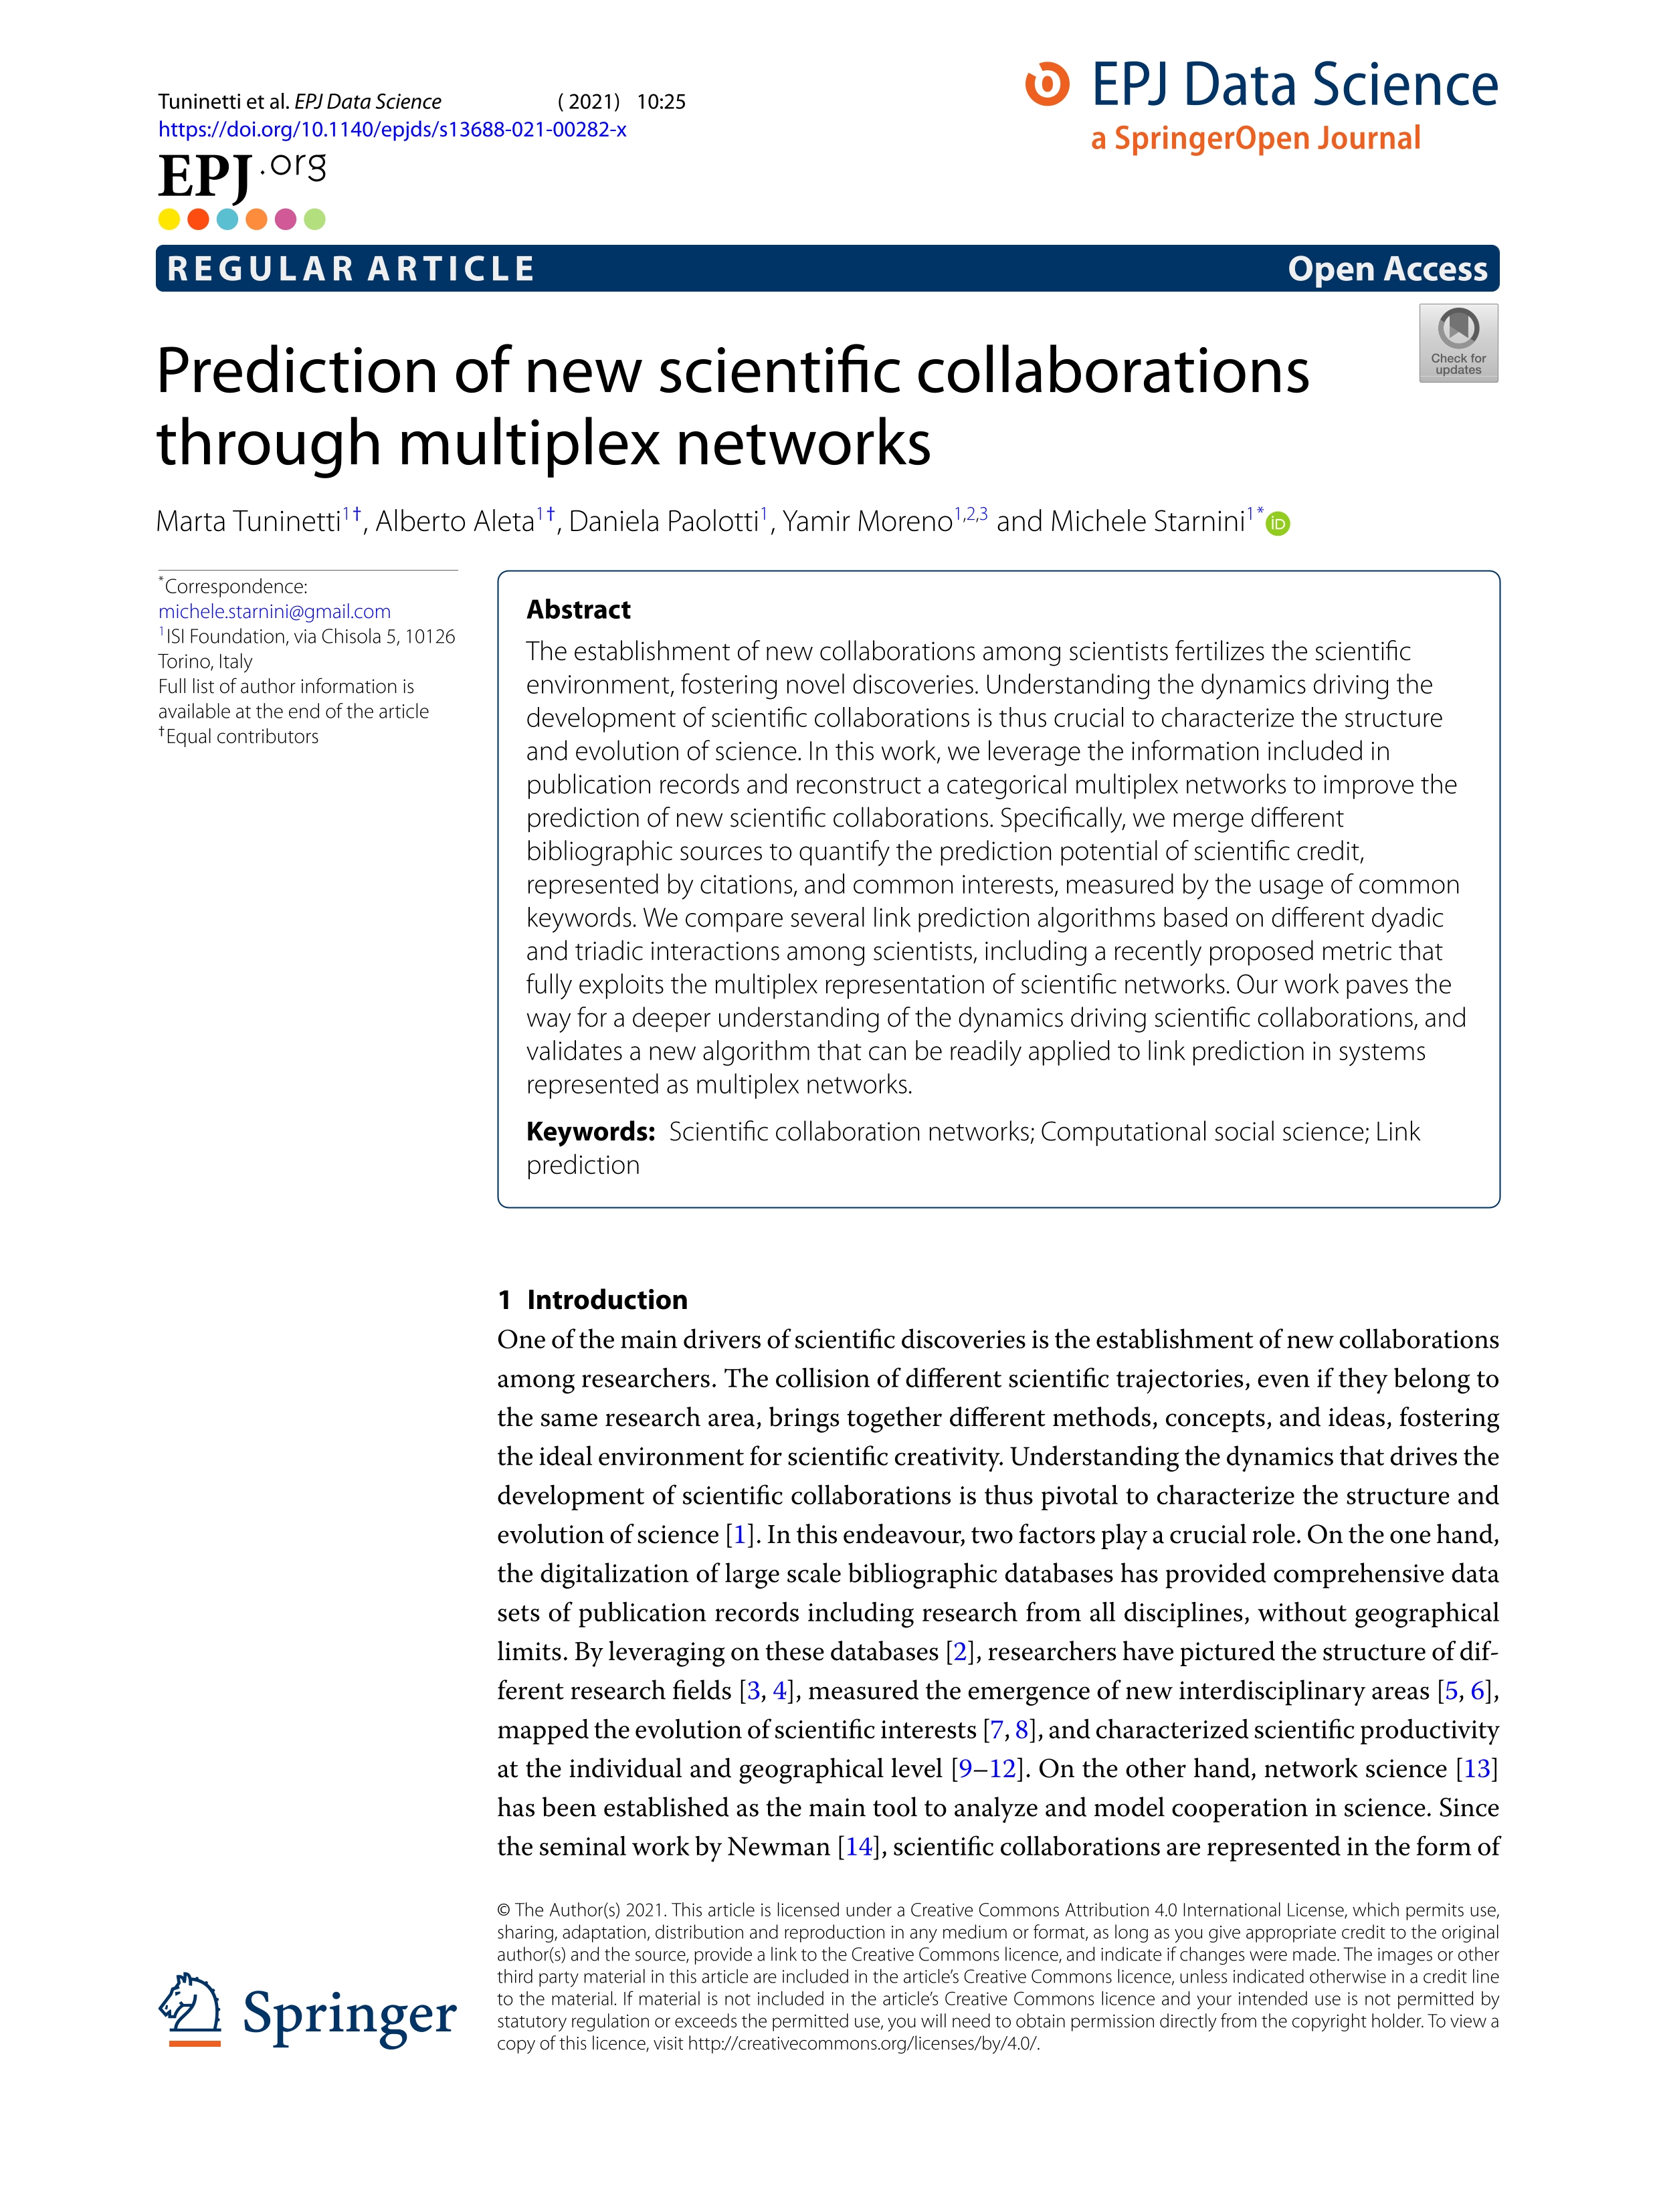 Prediction of new scientific collaborations through multiplex networks